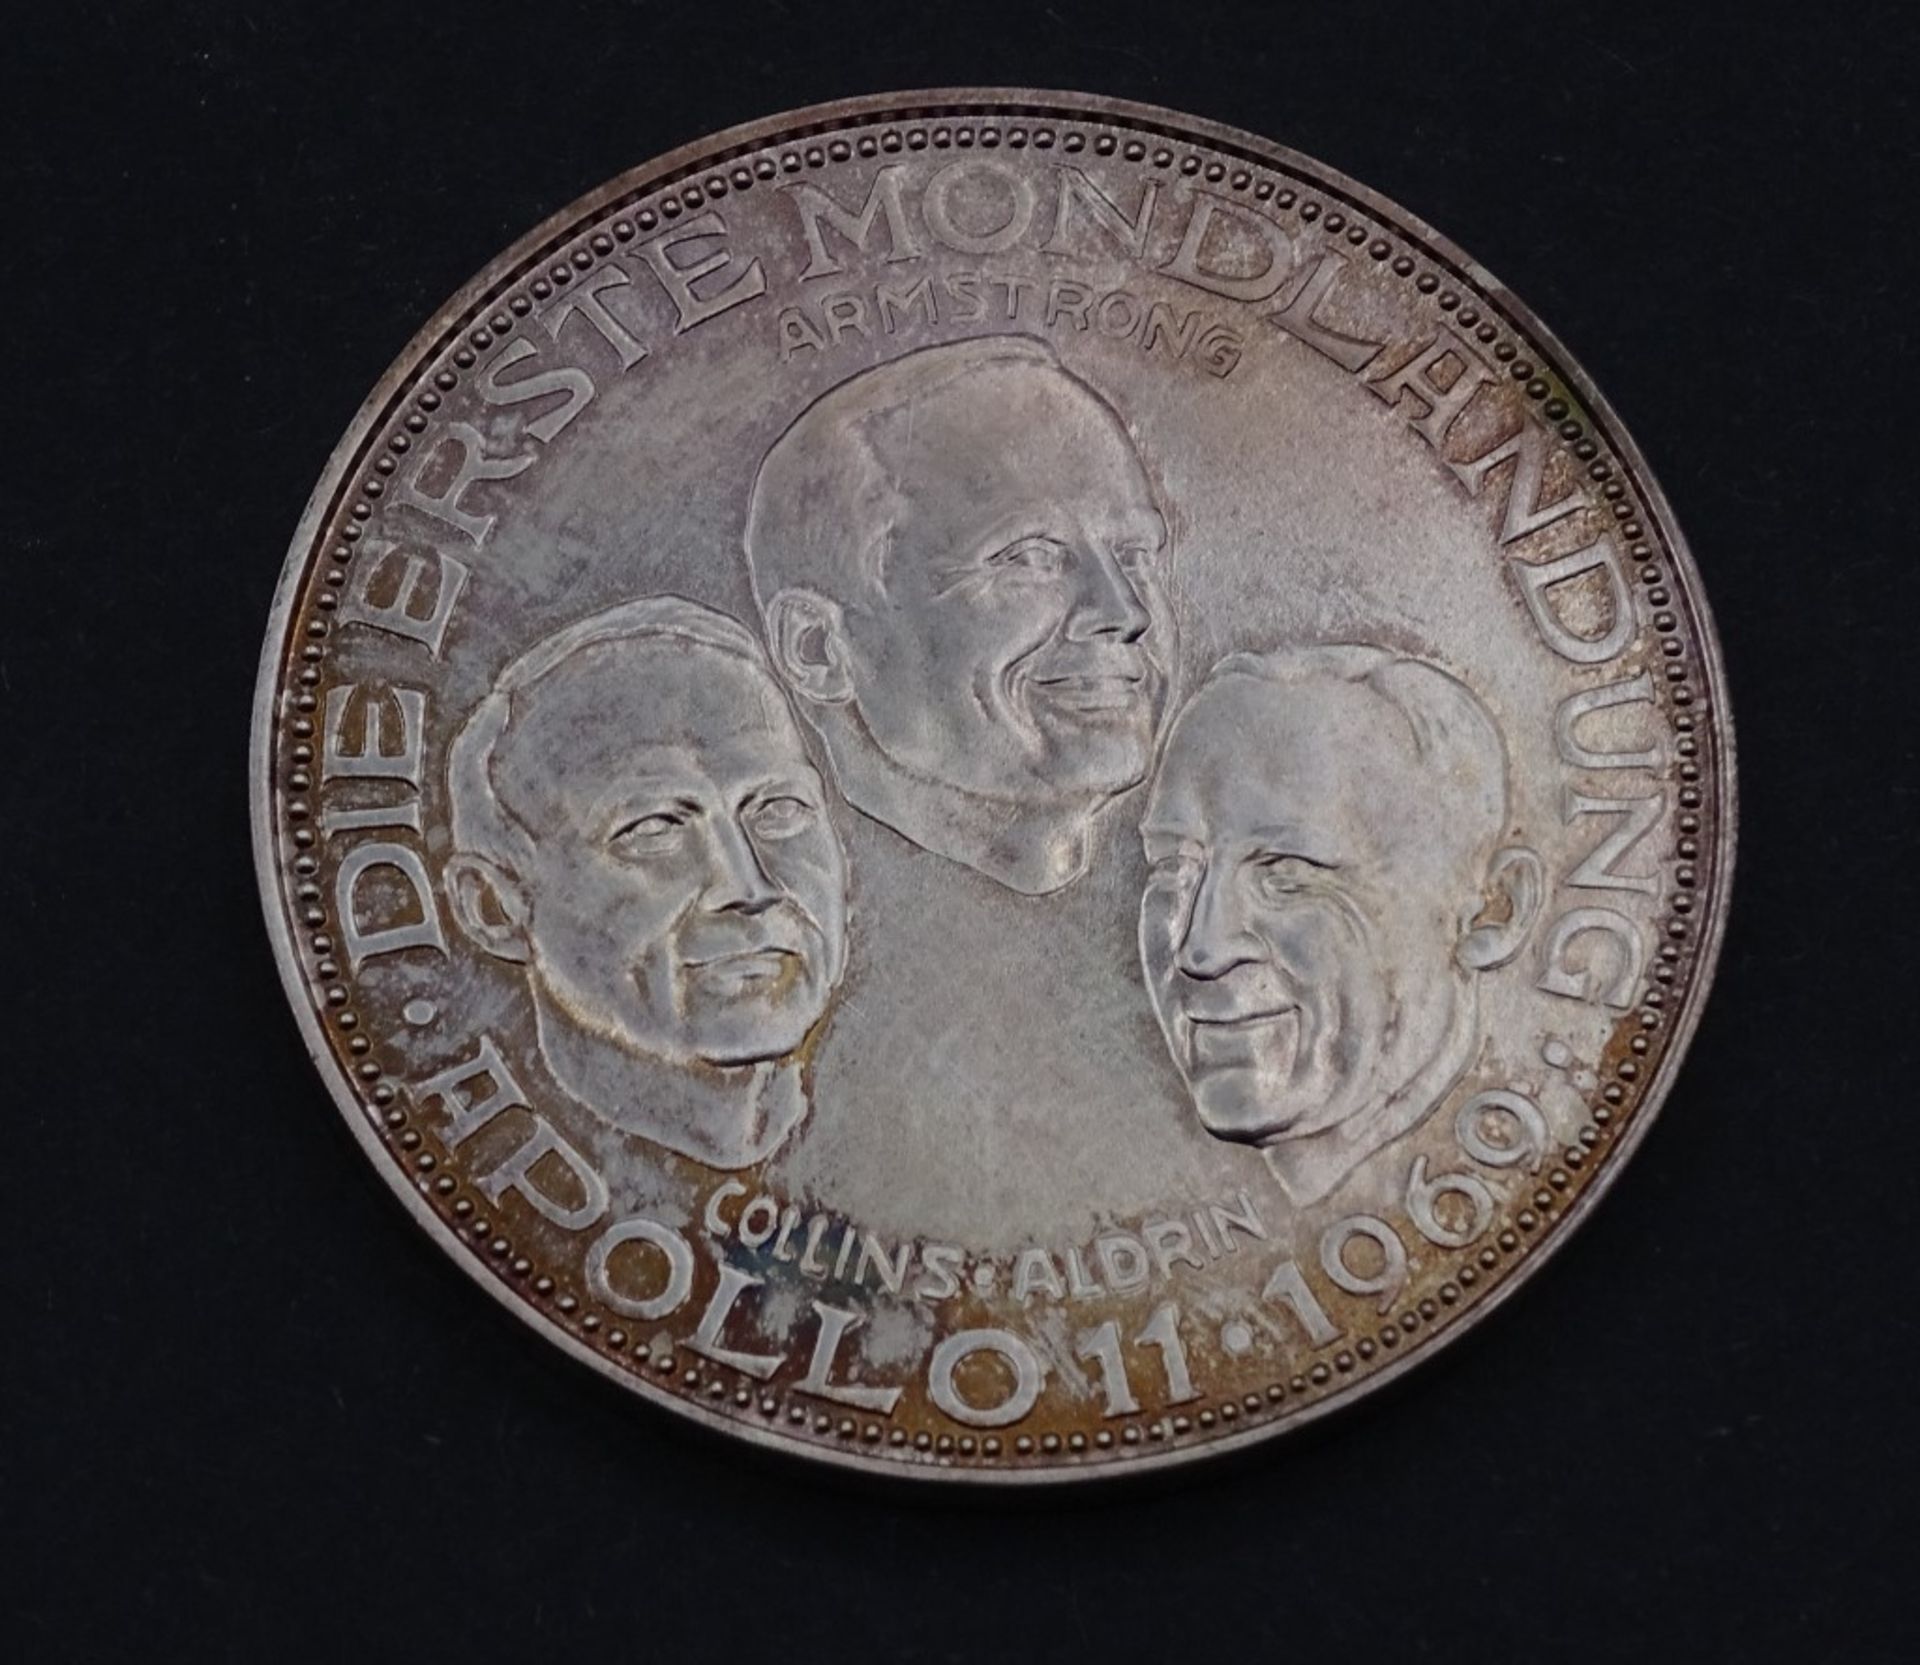 Feinsilber Medaille "Apollo 11", 1969, Die erste Mondladung", Silber 1000/000,25gr.- - -22.61 %